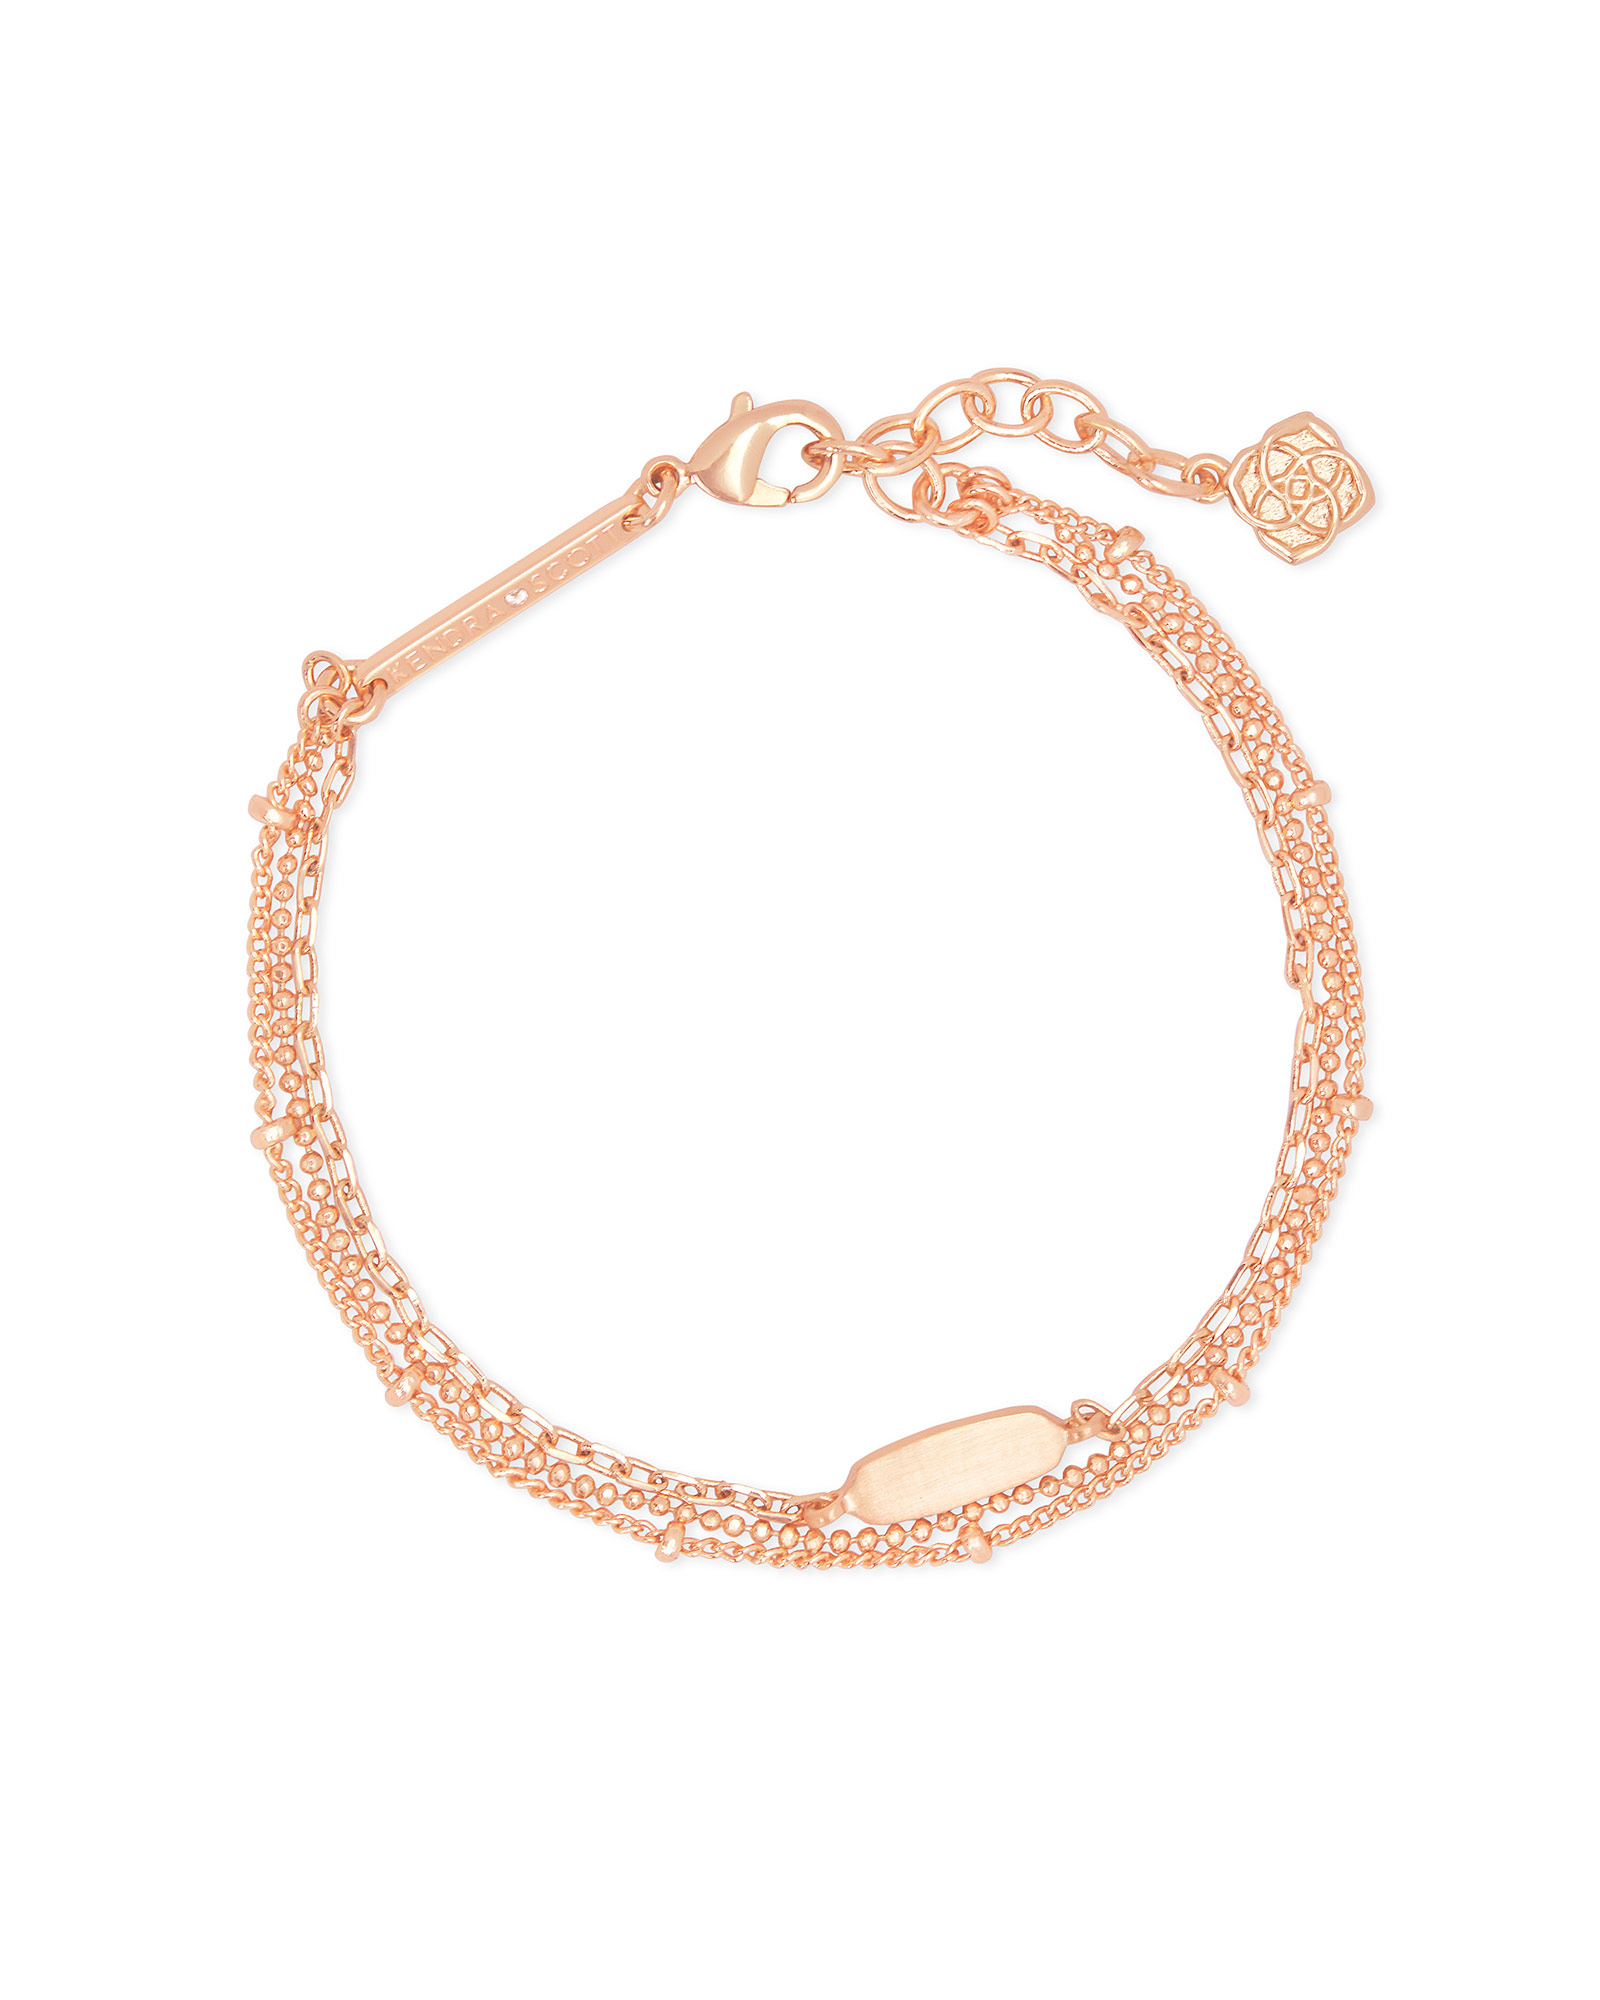 Fern Multi Strand Bracelet in Rose Gold | Kendra Scott